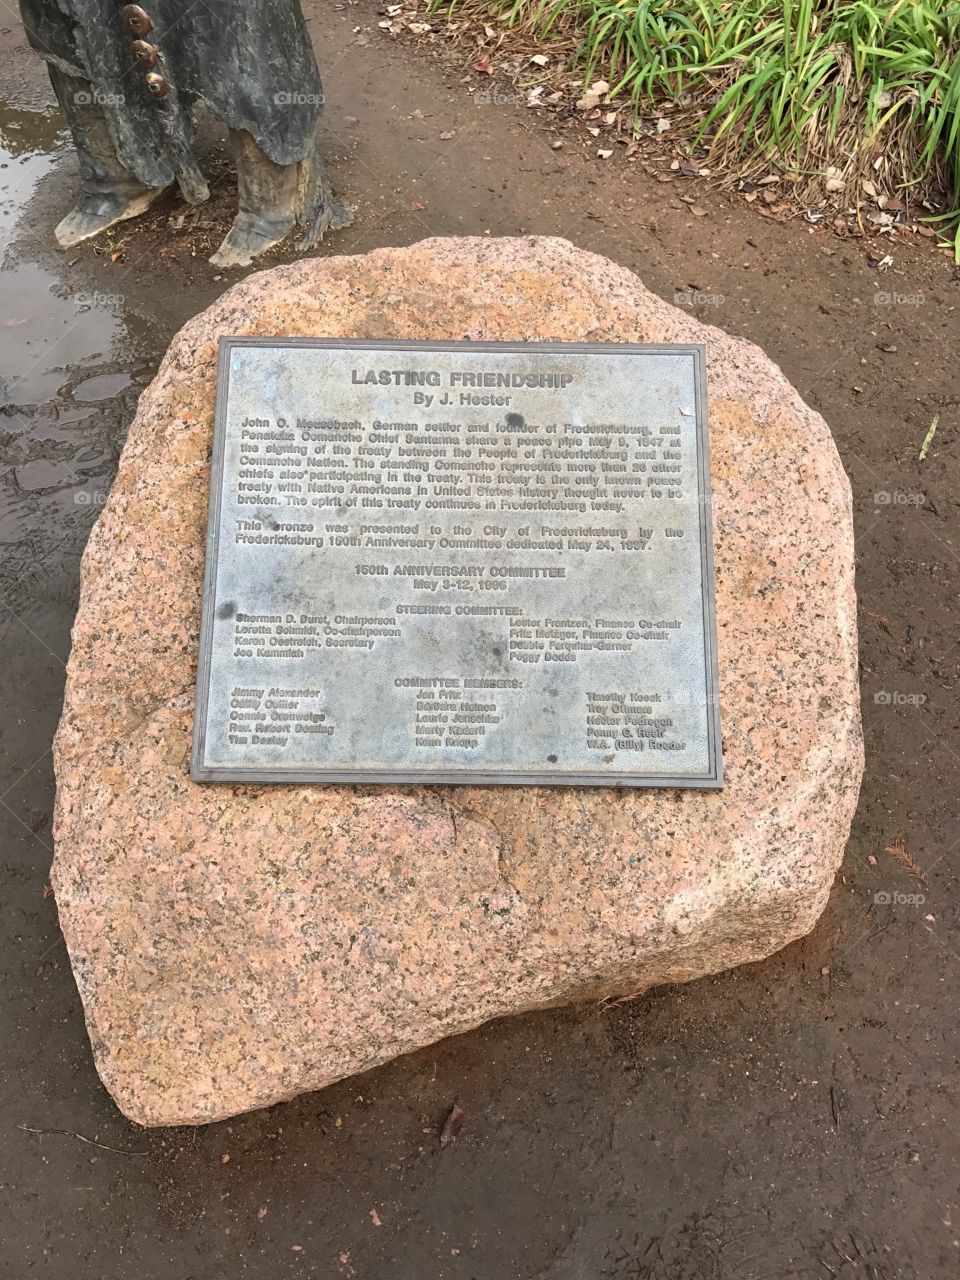 'Lasting Friendship' plaque in Fredericksburg, TX